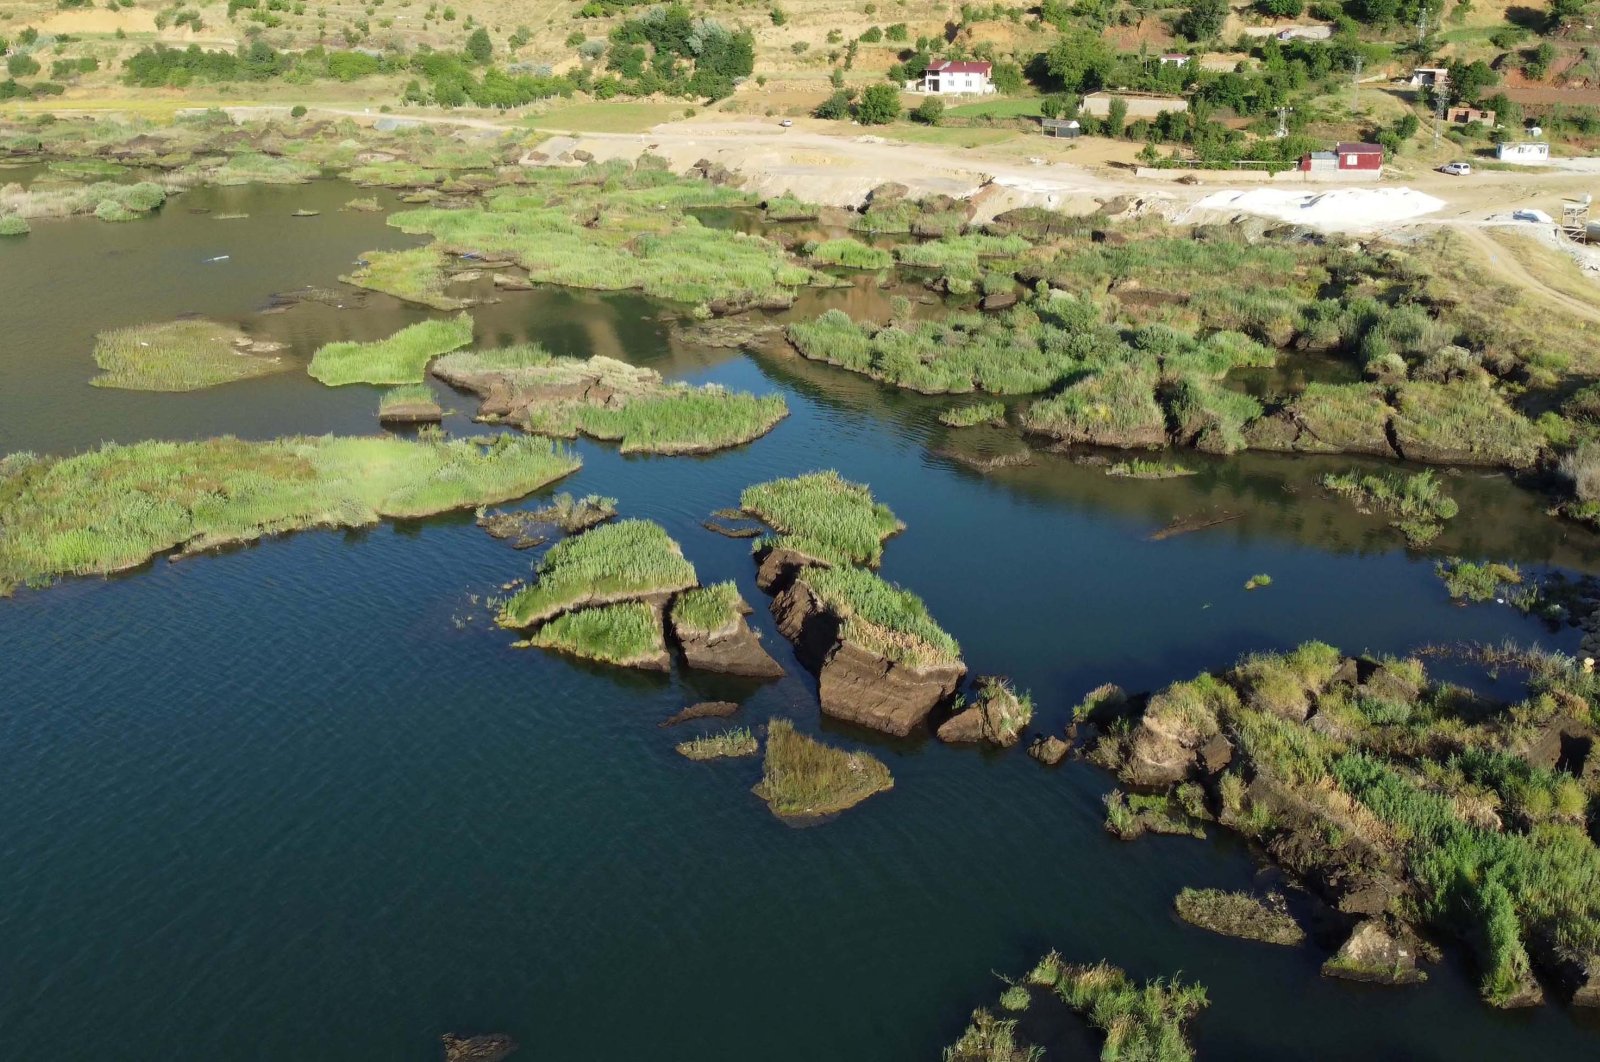 Türkiye ramps up efforts to preserve 3,000-year-old floating islands